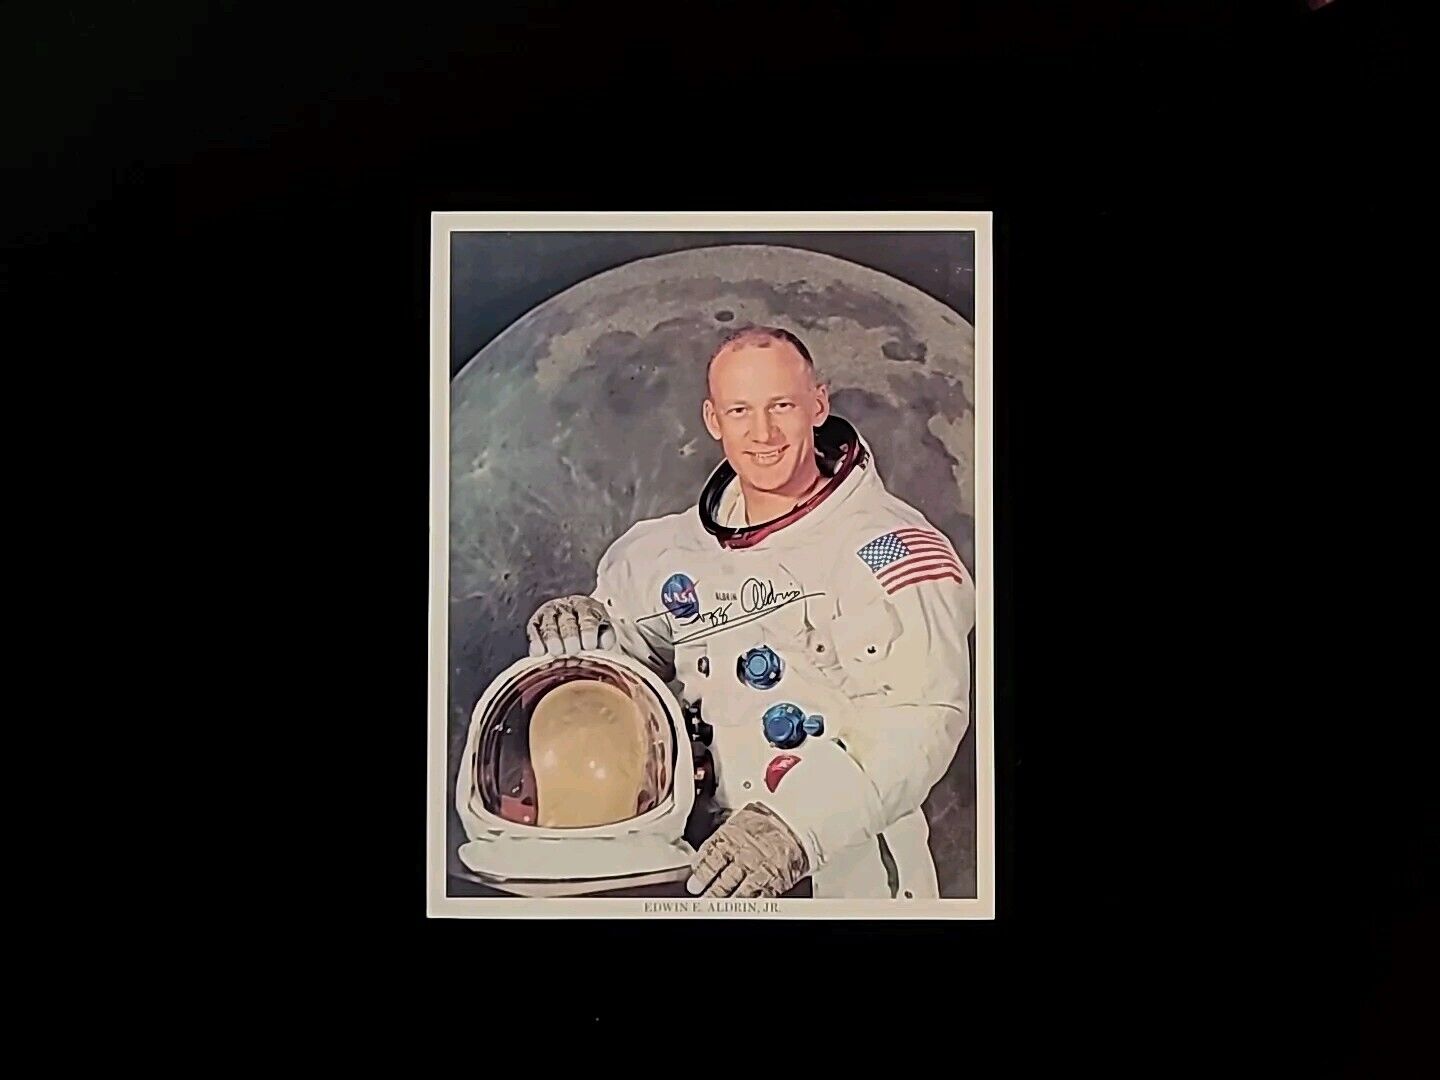 US Astronaut Buzz Aldrin Jr Signed NASA Apollo 11 Photo Space Lunar Moon Mission